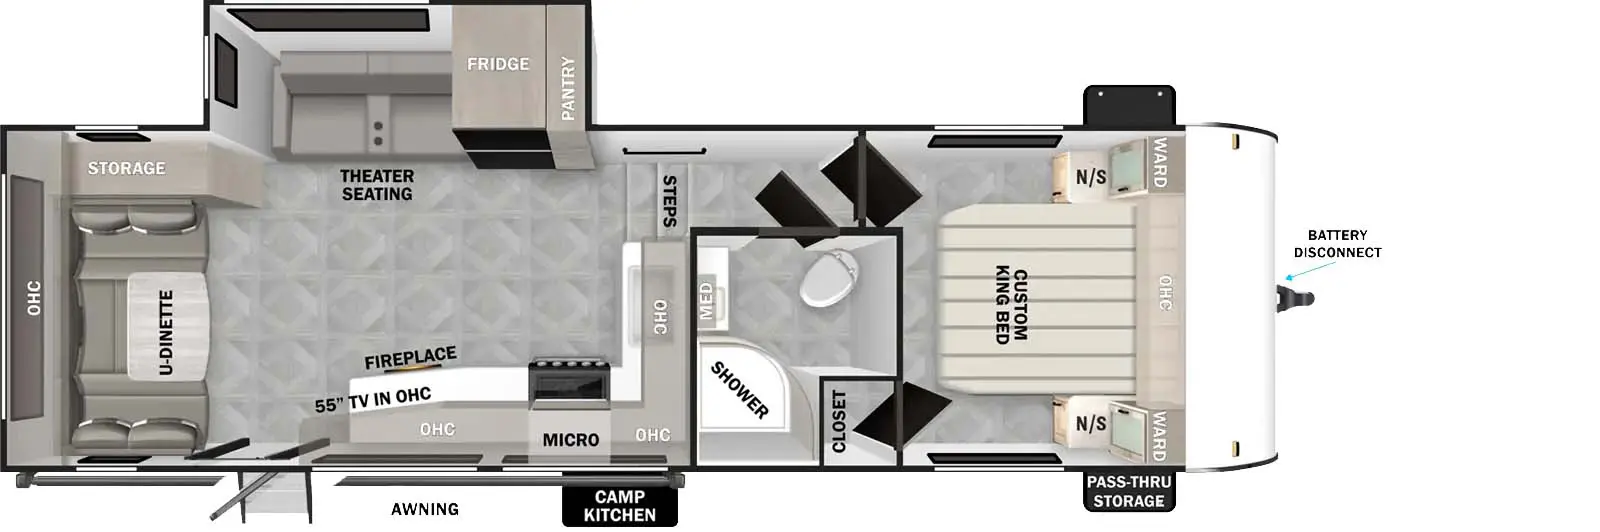 T25RD Floorplan Image